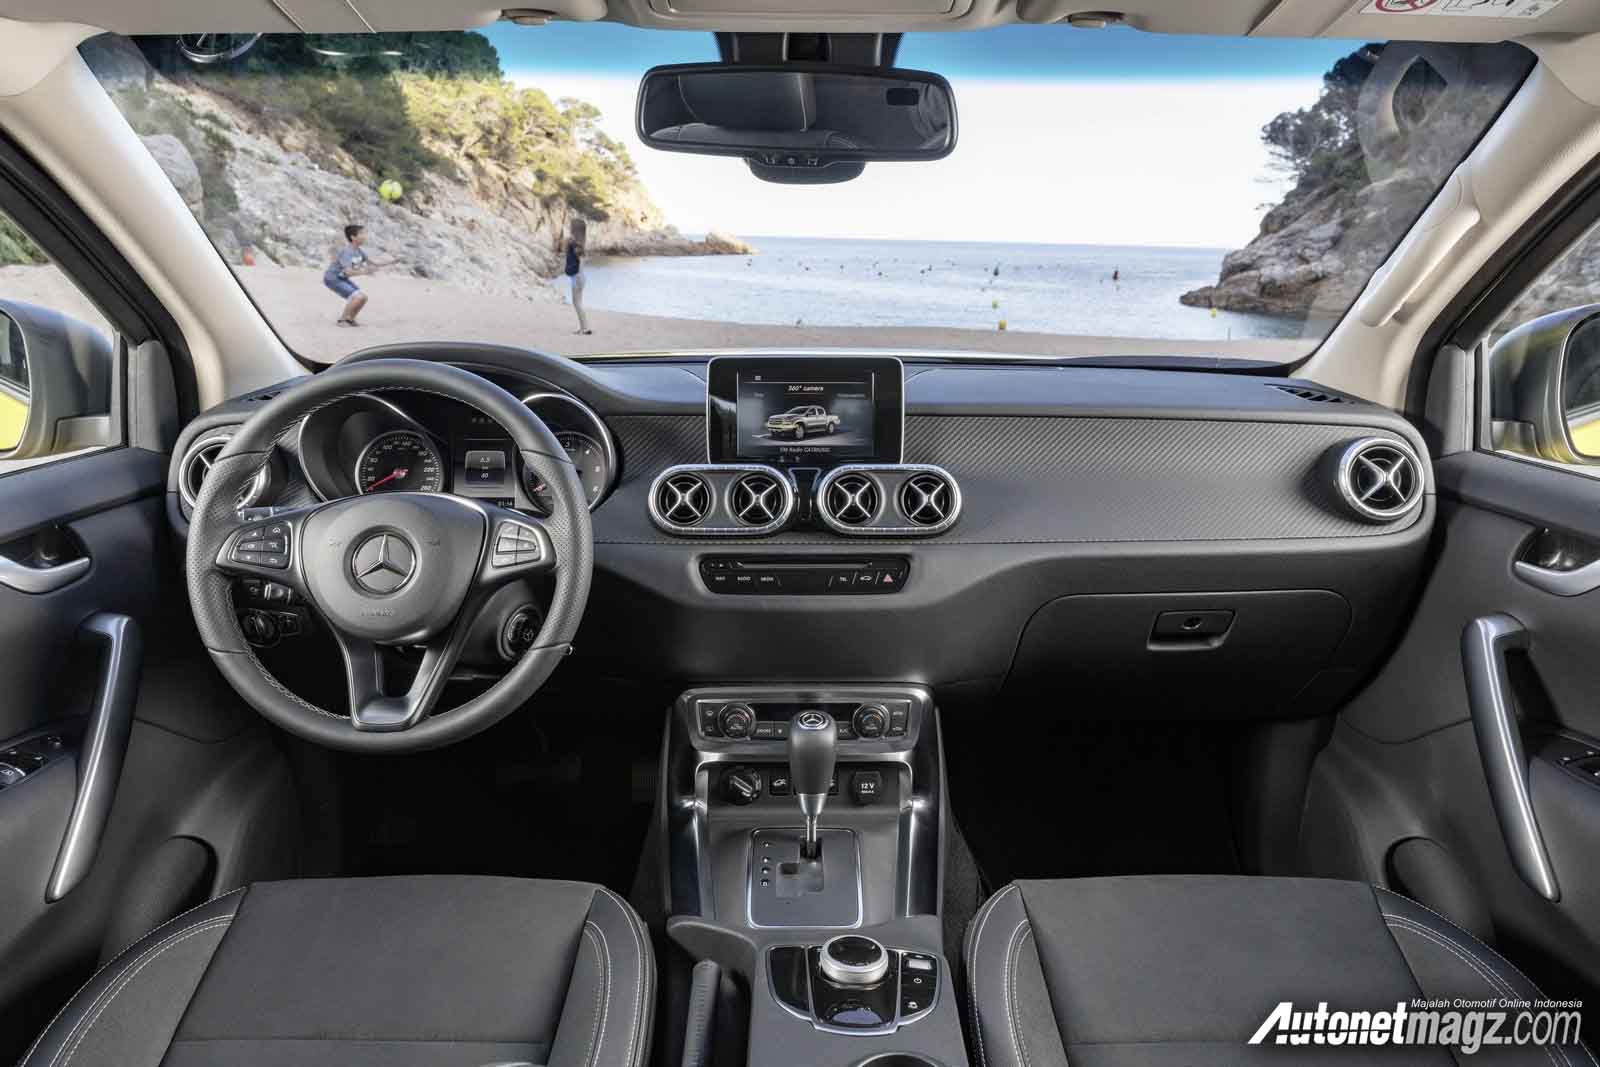 Berita, interior Mercedes Benz X-Class 2: Mercedes Benz X-Class Meluncur, Sesuai Harapan Kah?